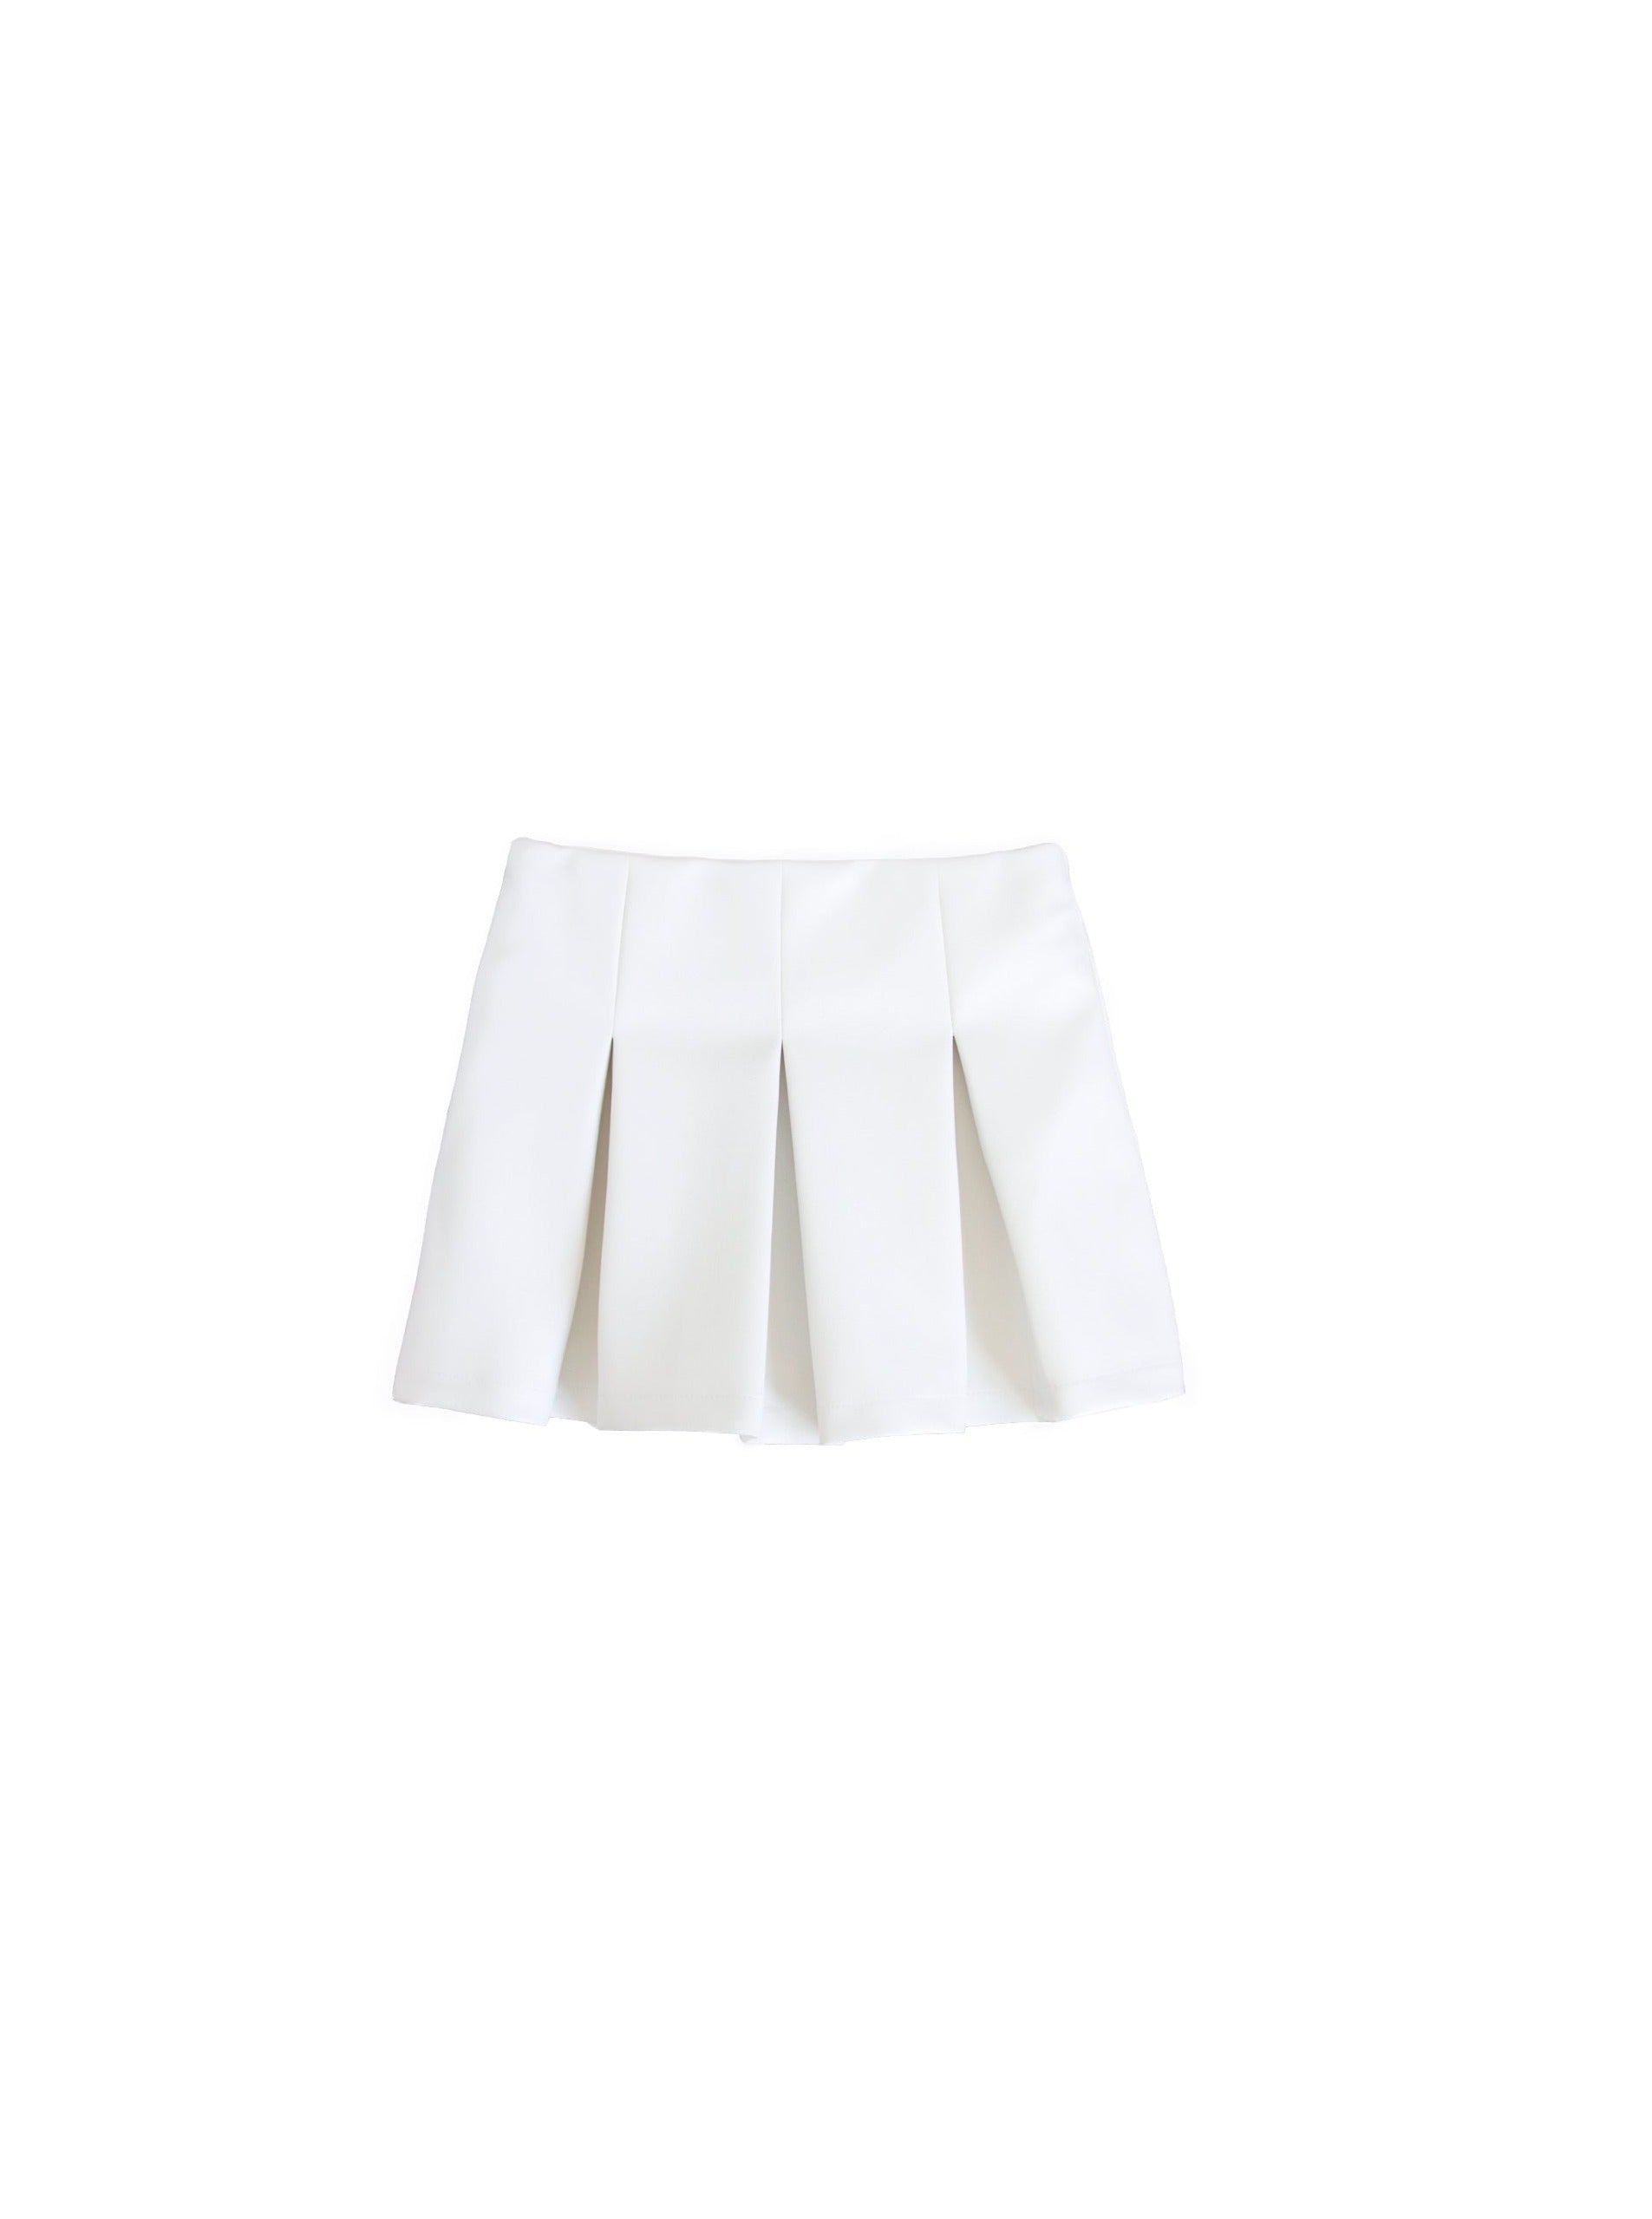 White faux leather pleated mini skirt.